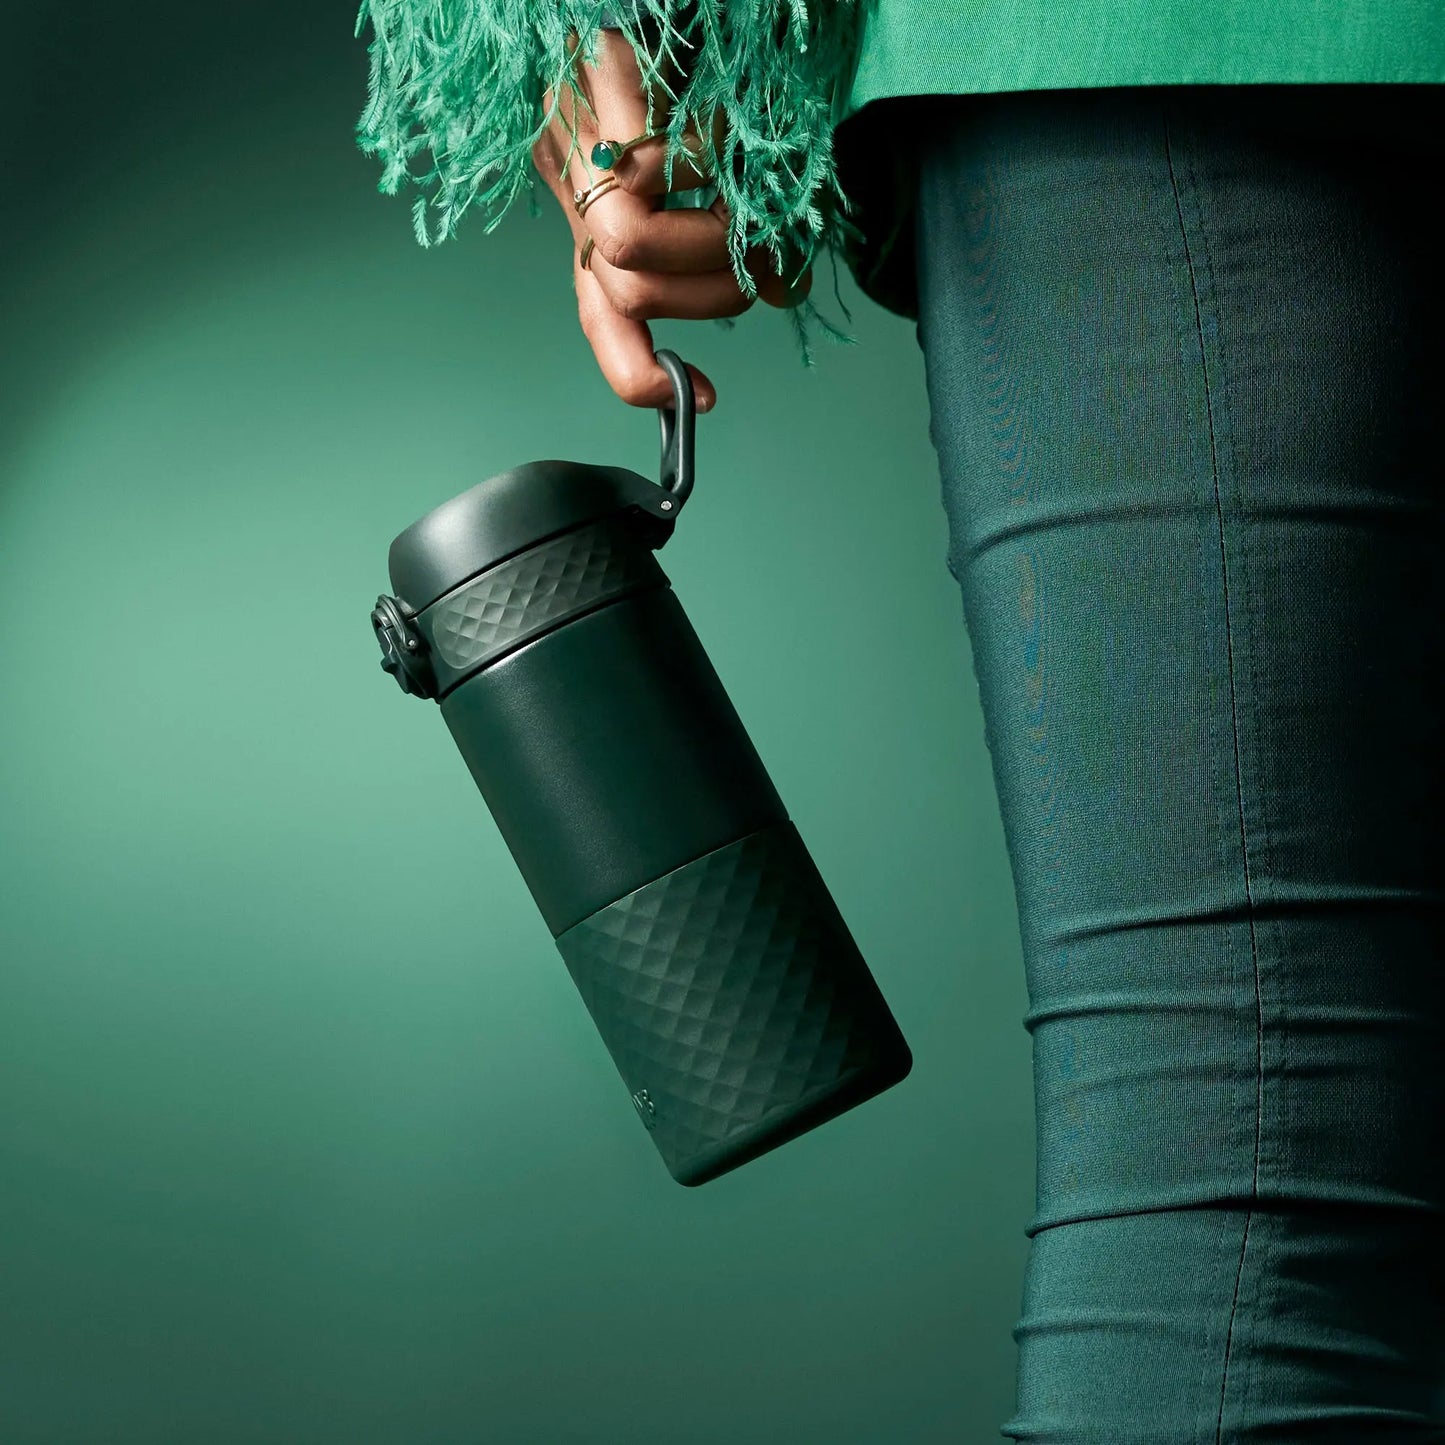 Leak Proof Vacuum Insulated Cup, HotShot Travel Mug, Dark Green, 360ml (12oz) Ion8